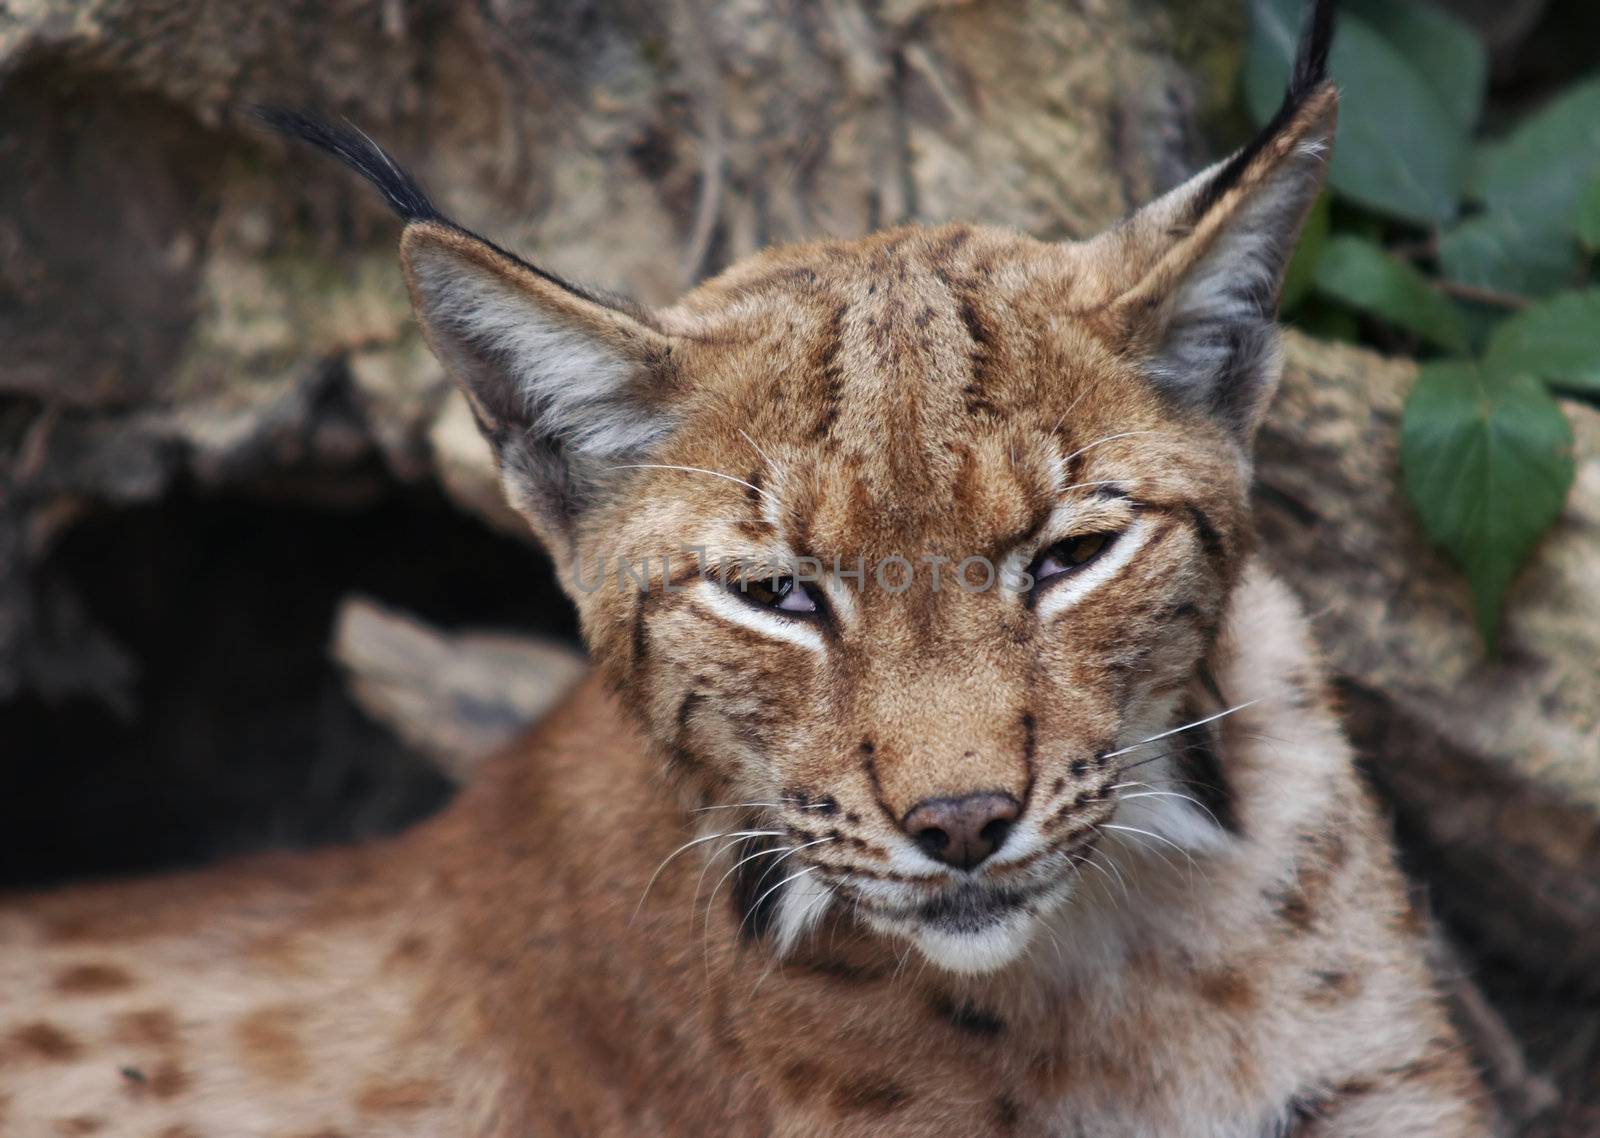 Shot of the European lynx - detail of the head